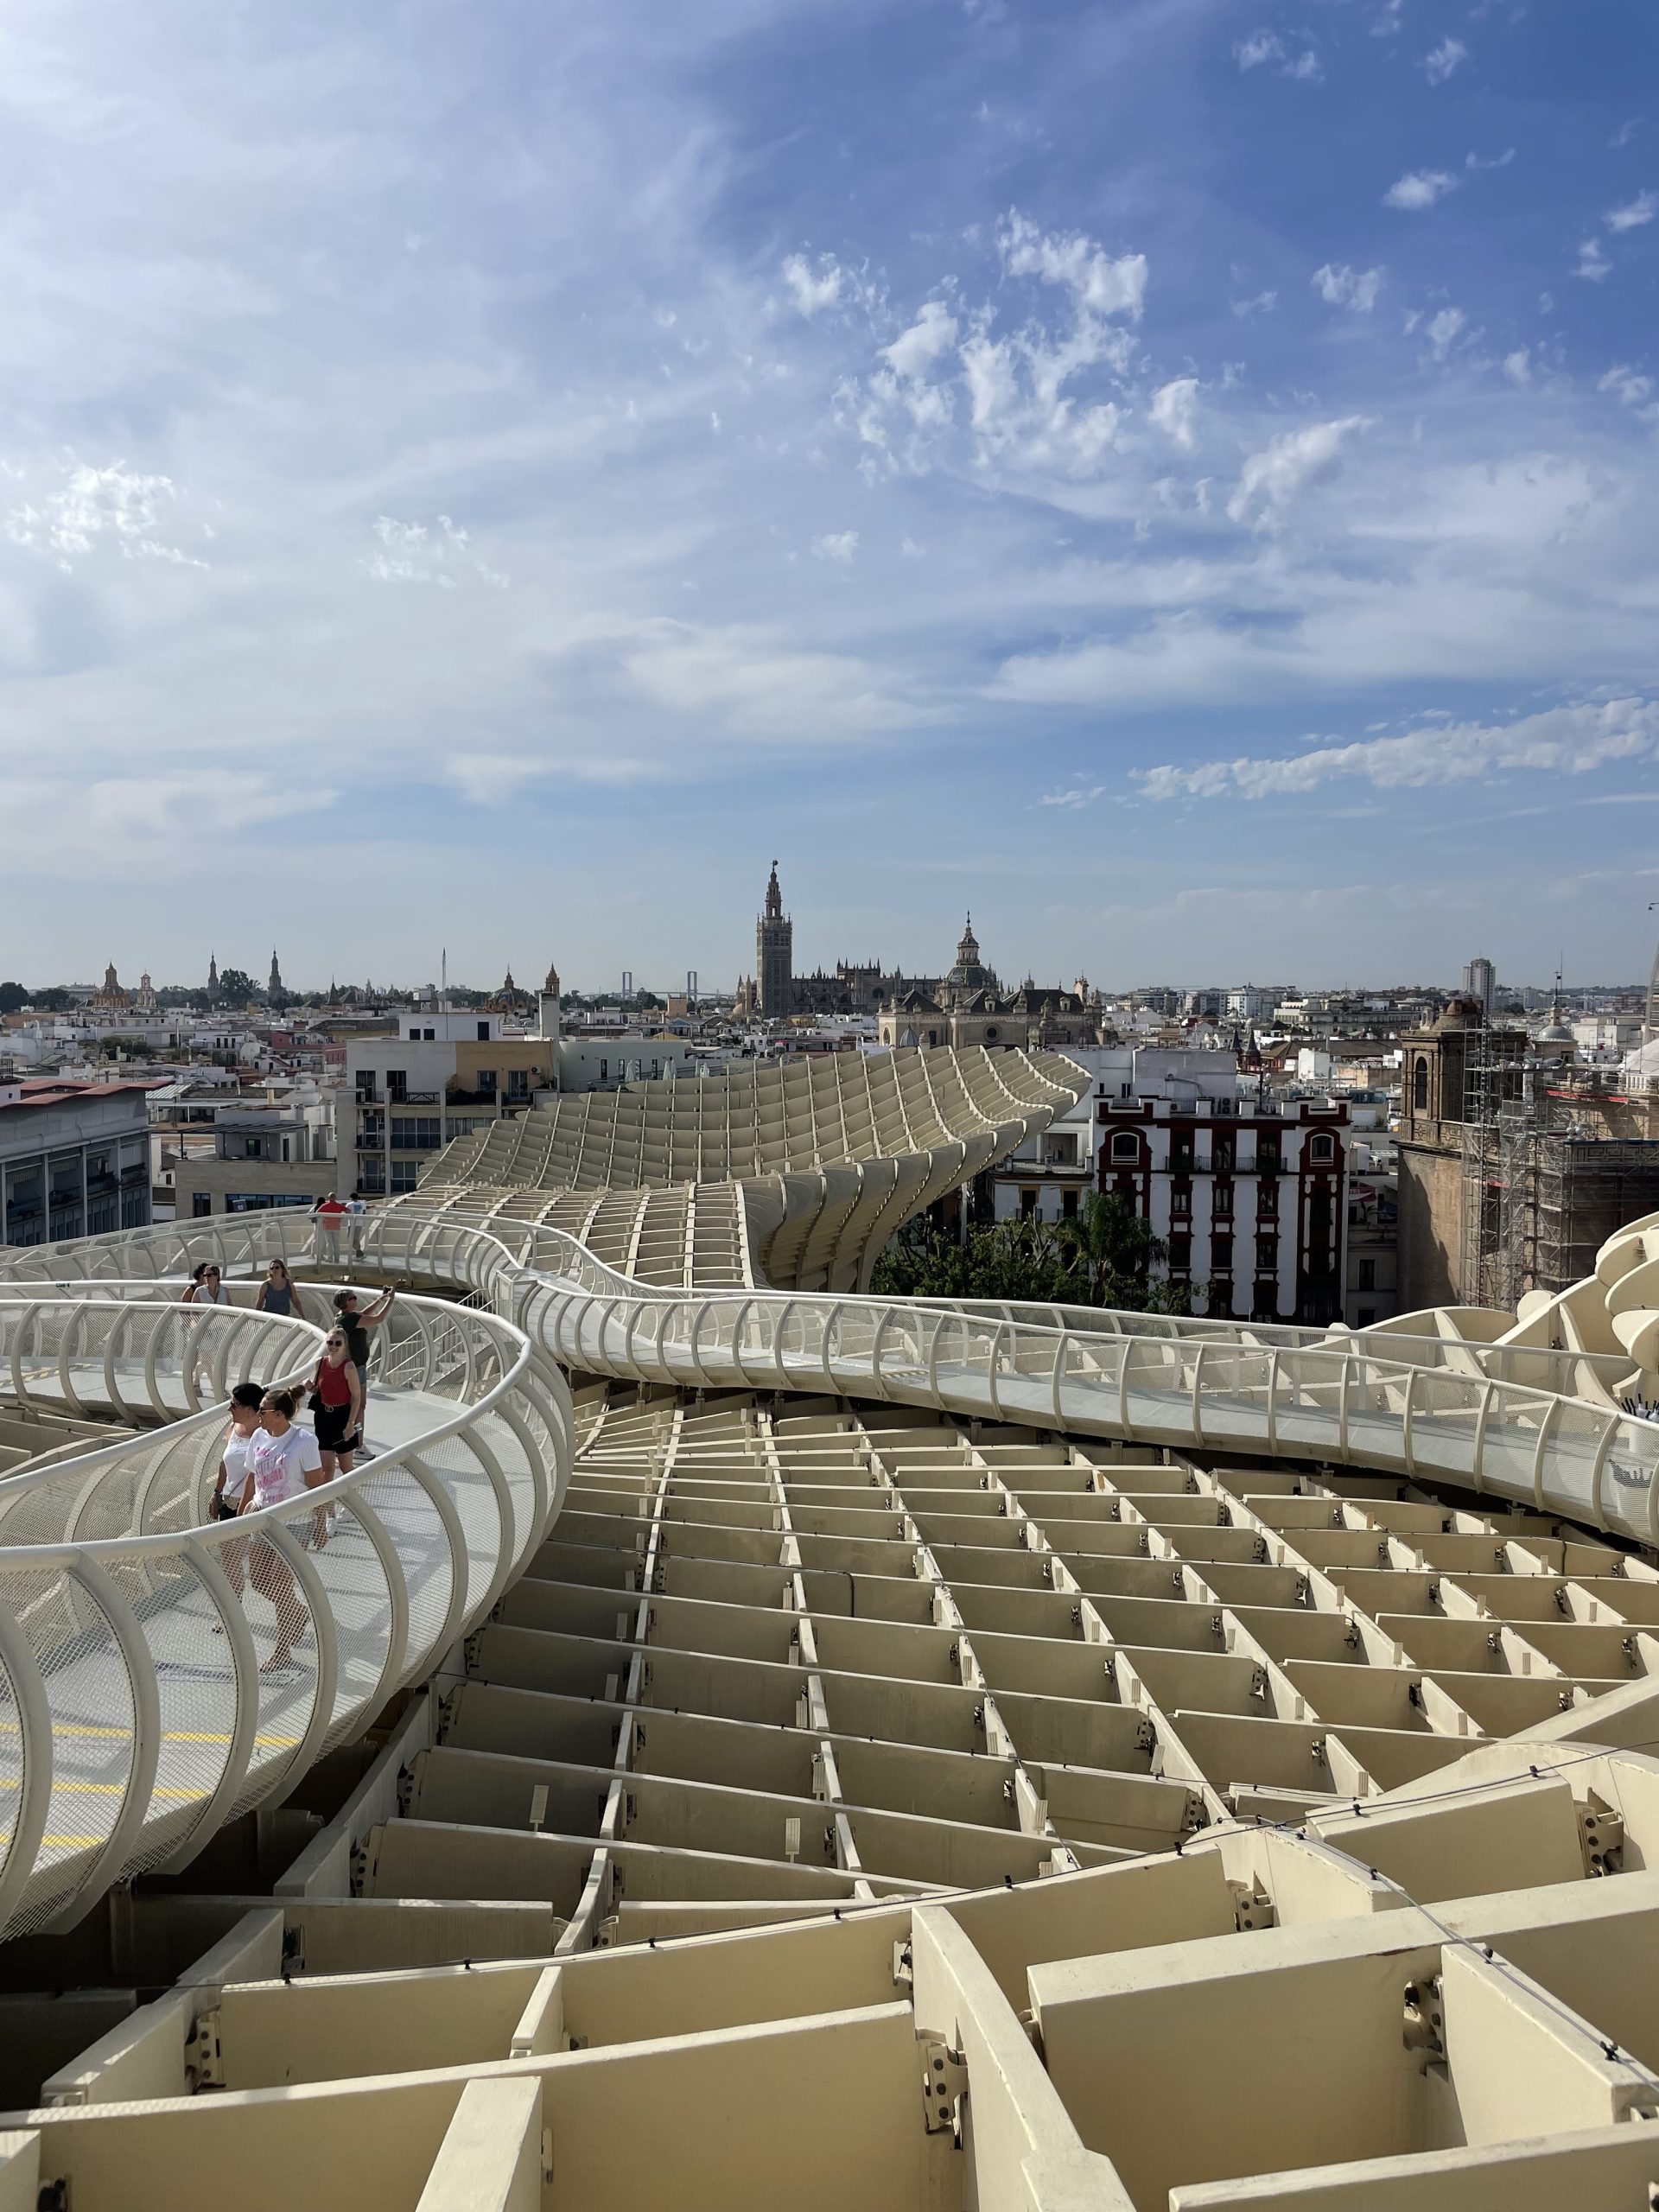 ENZO architectuur N interieur - team uitje - Sevilla - 15-jarig jubileum - setas de seville